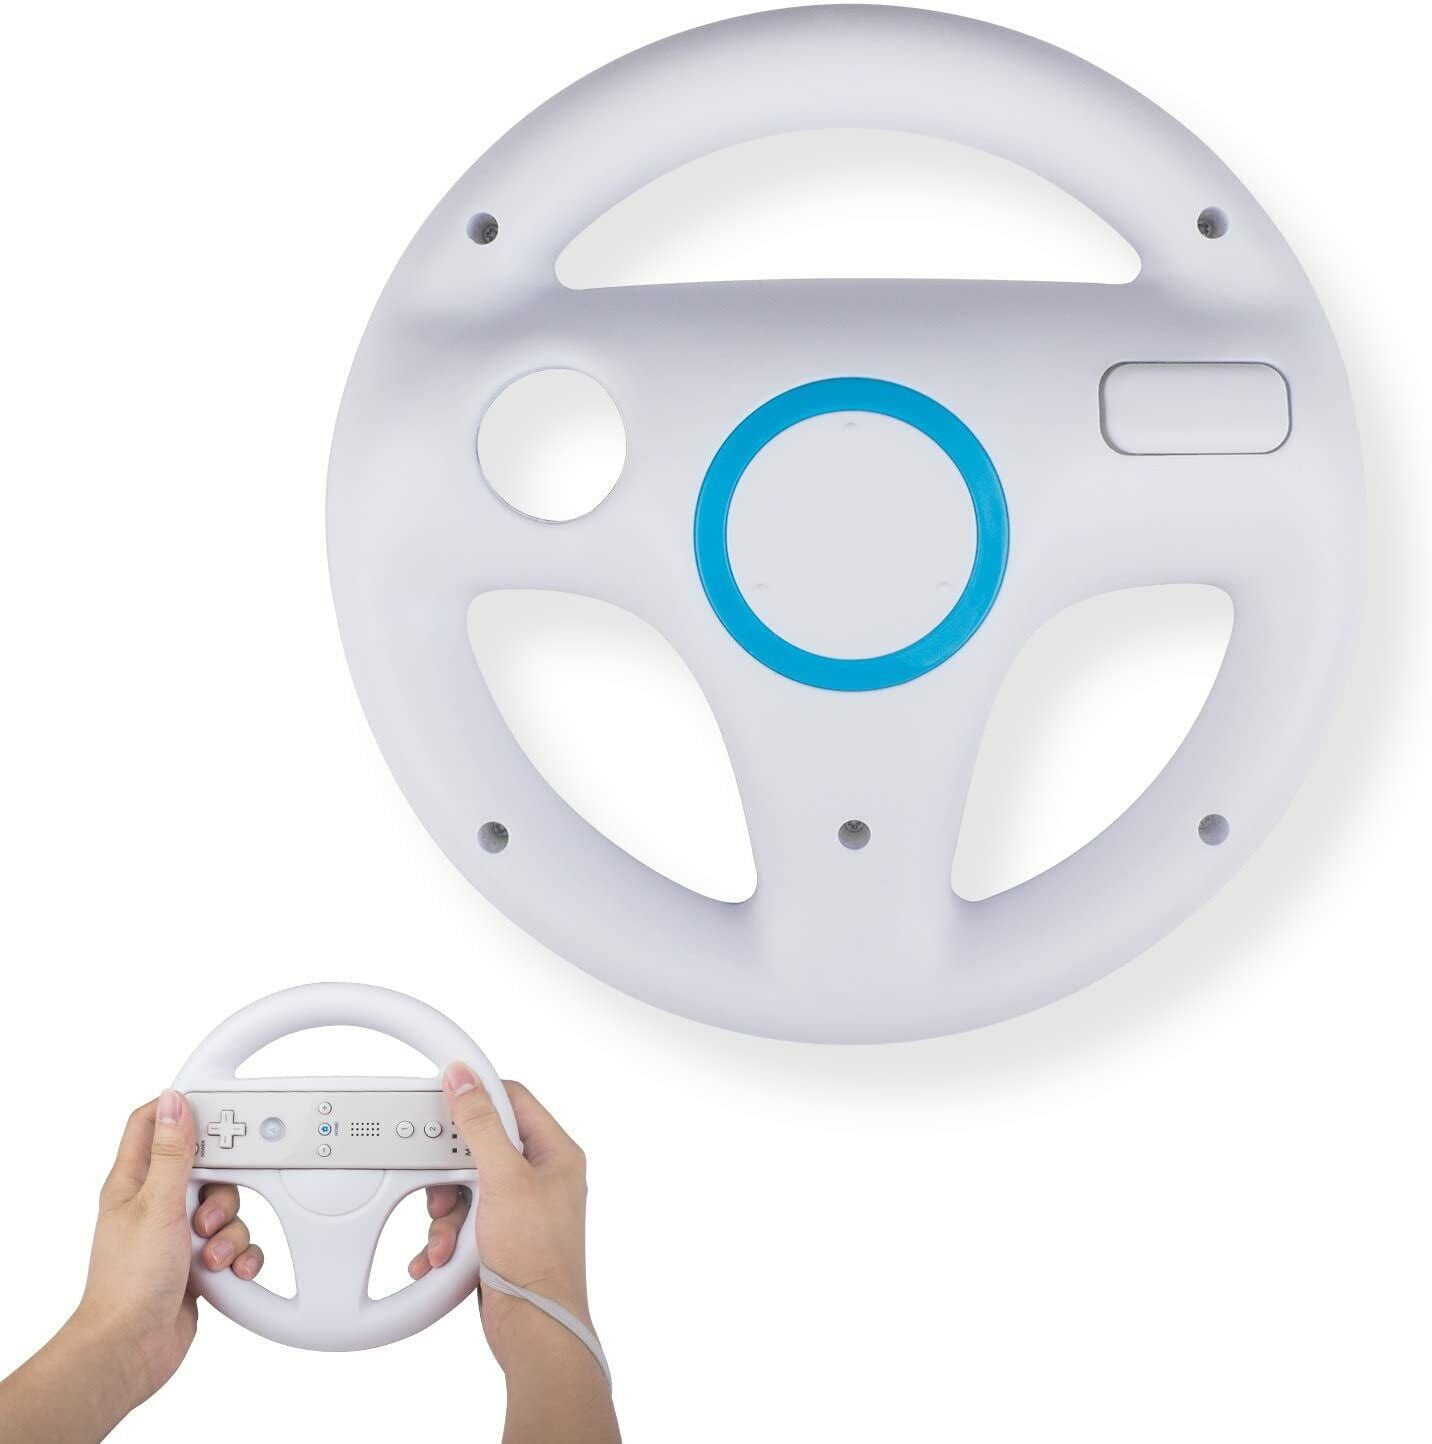 Mario Kart Wii With Controller Wheel Nintendo Wii Used